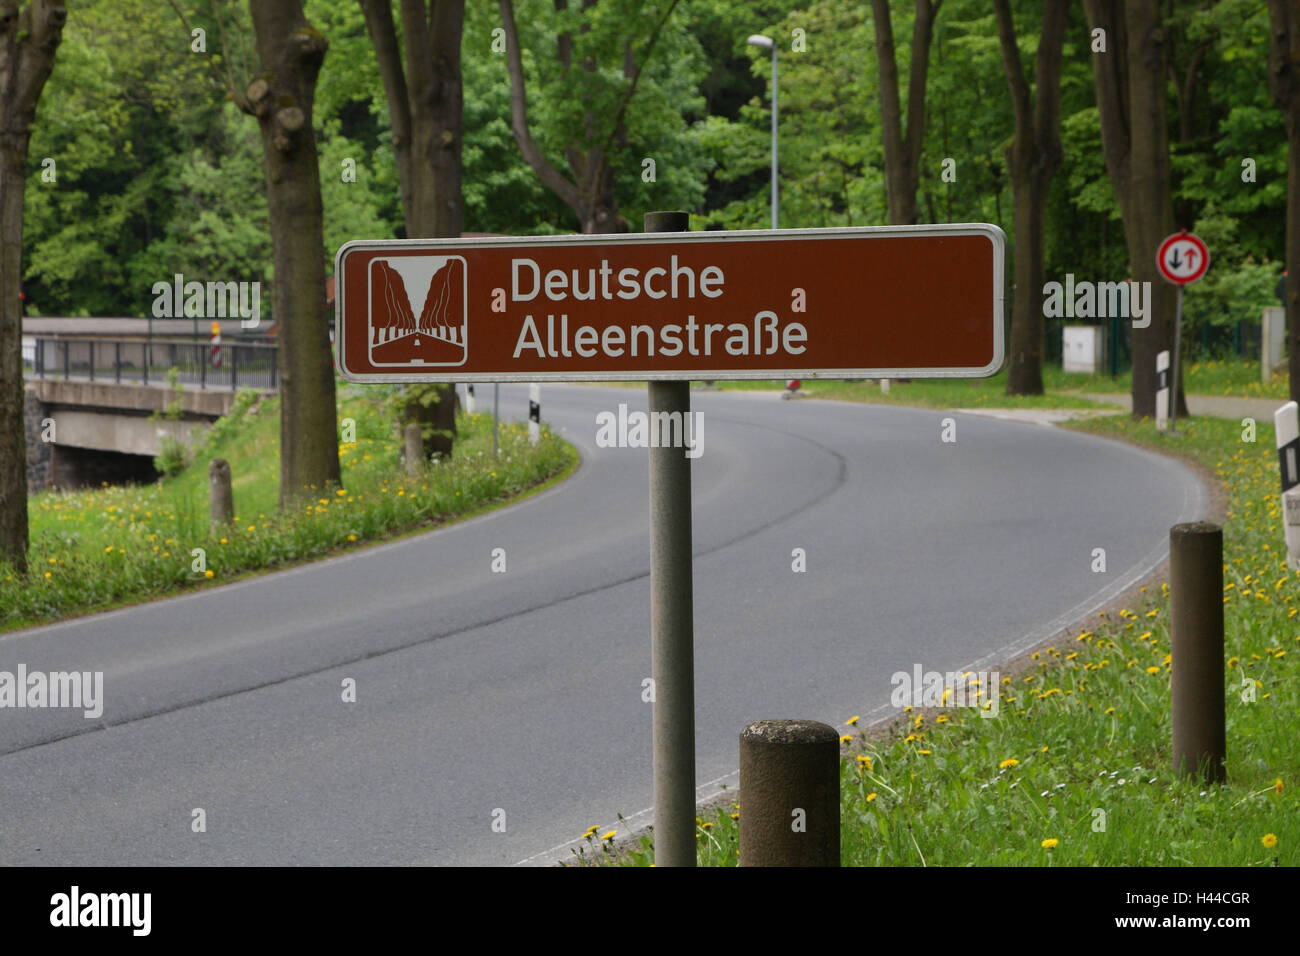 Germany, Saxon Switzerland, roadside, sign, German Alleenstrasse, Stock Photo